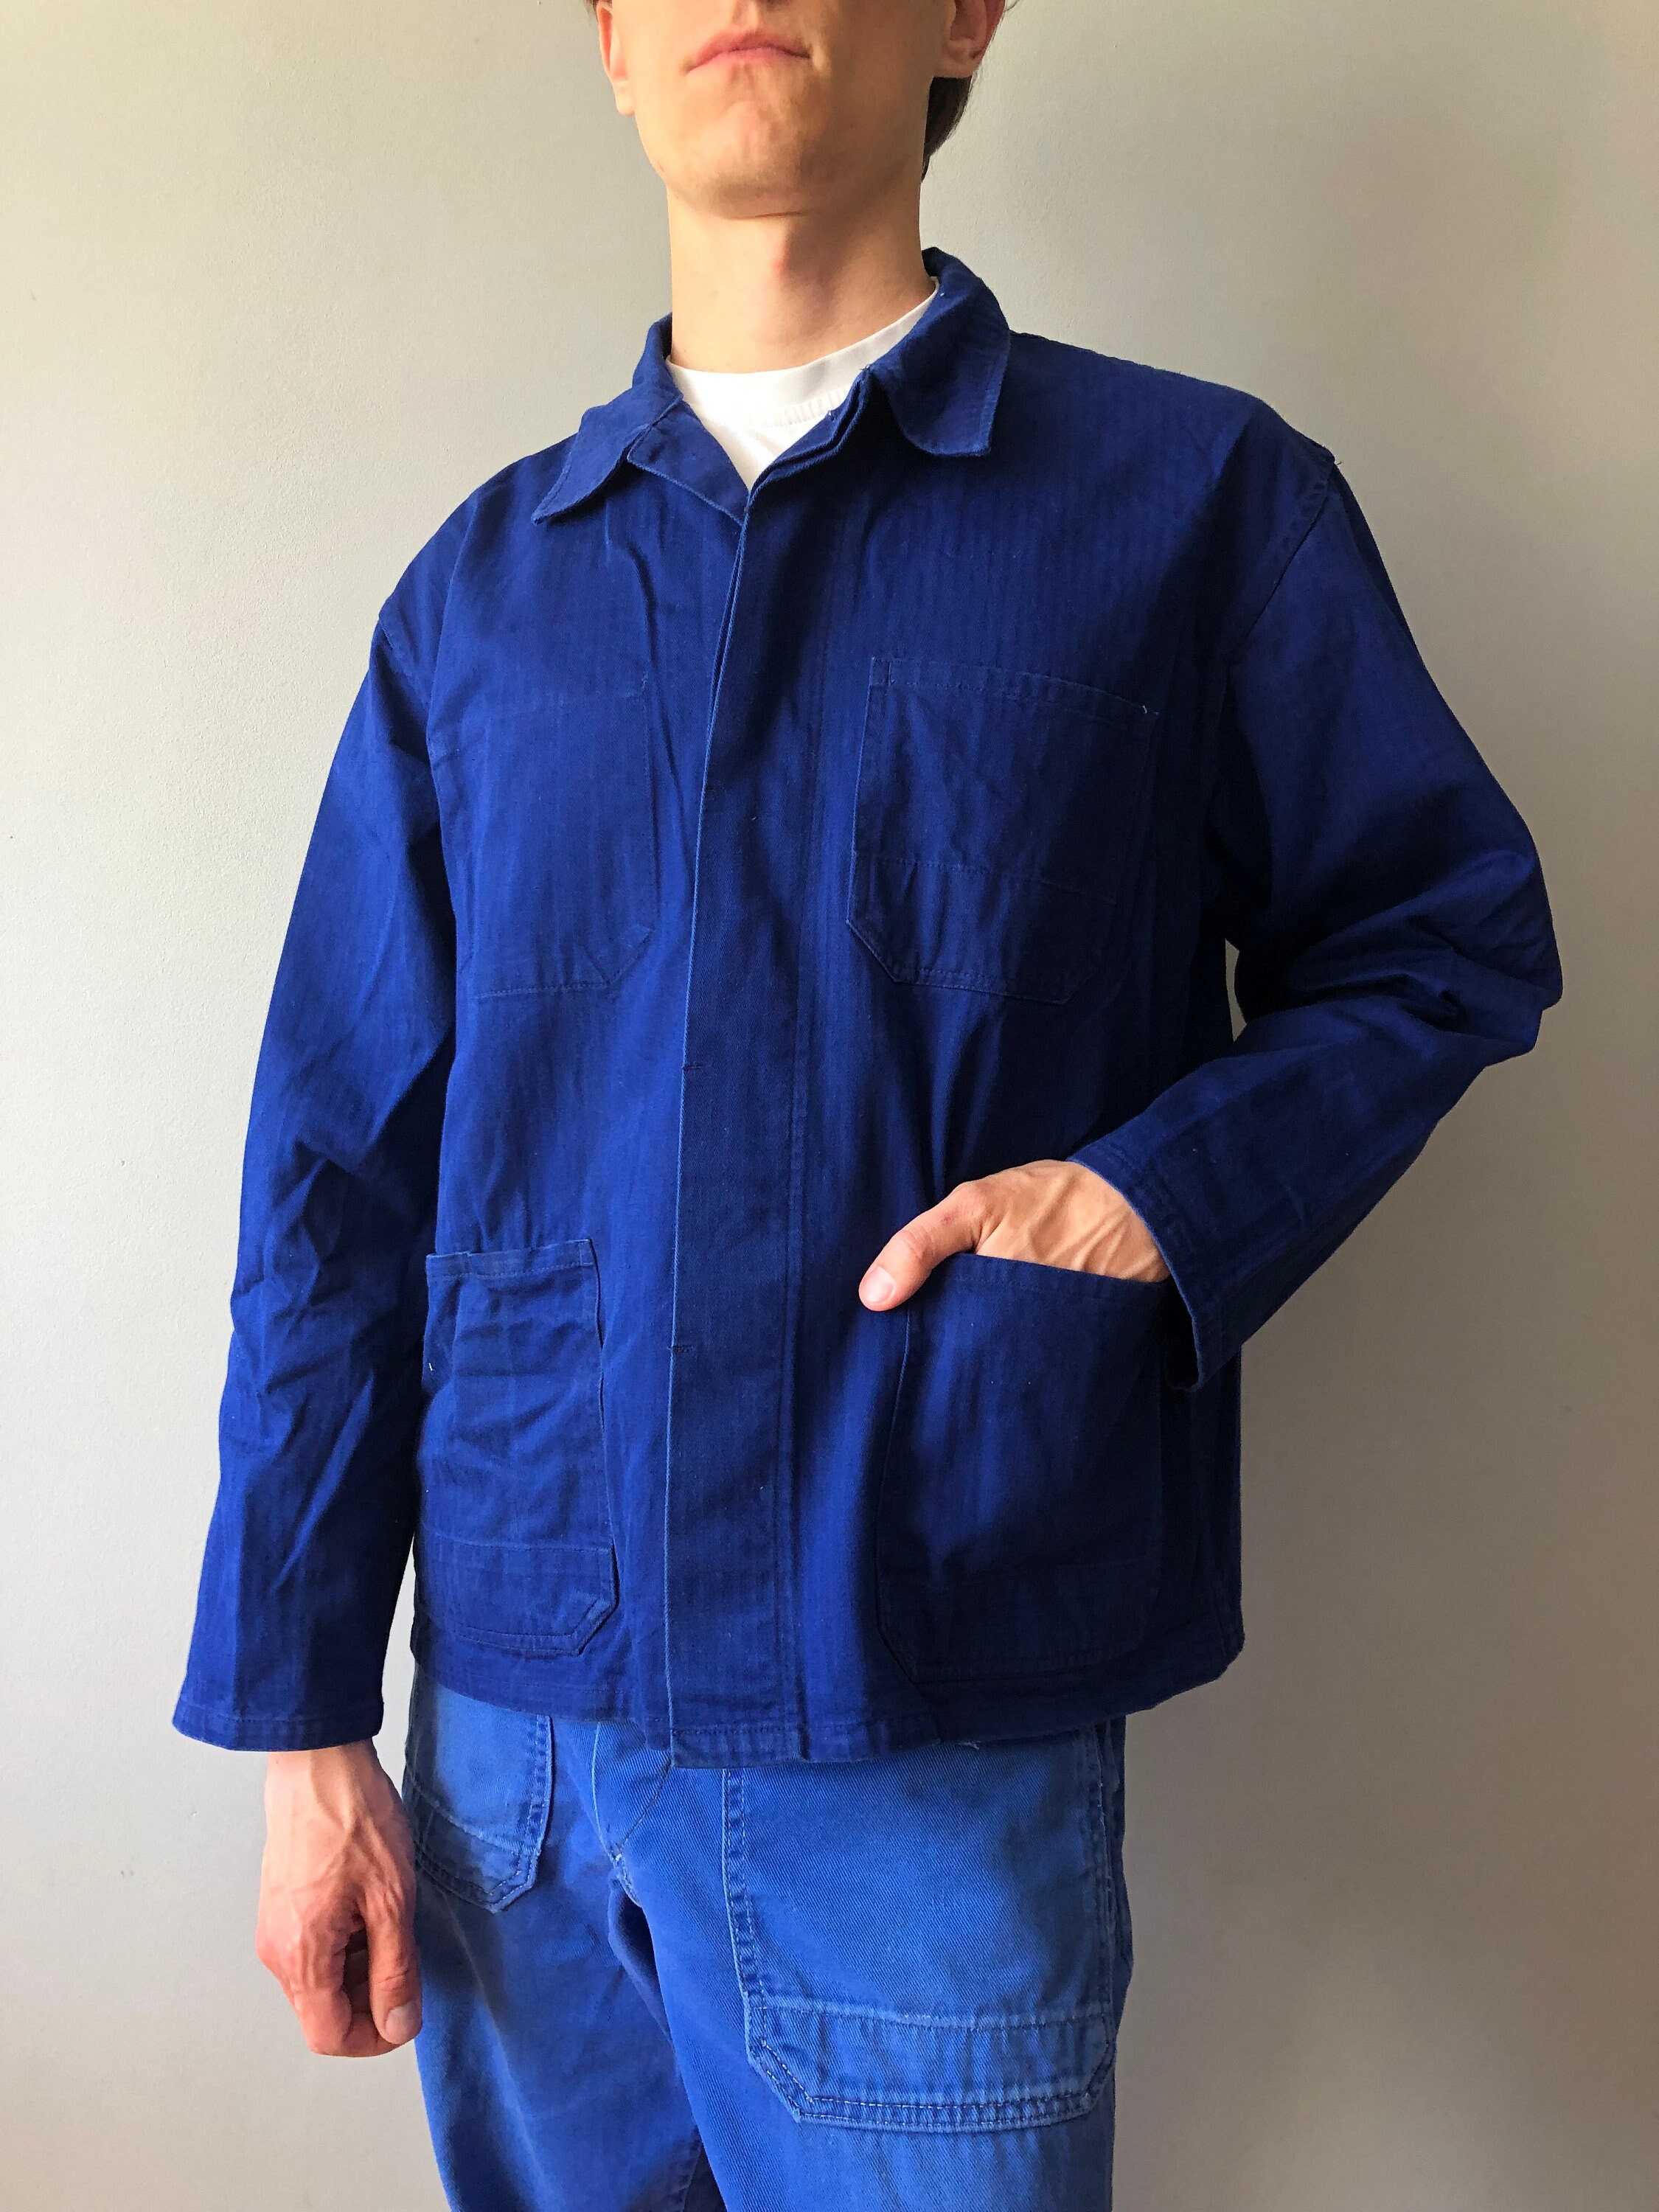 French Work Jacket / Bleu De Travail / French Workwear / - Etsy